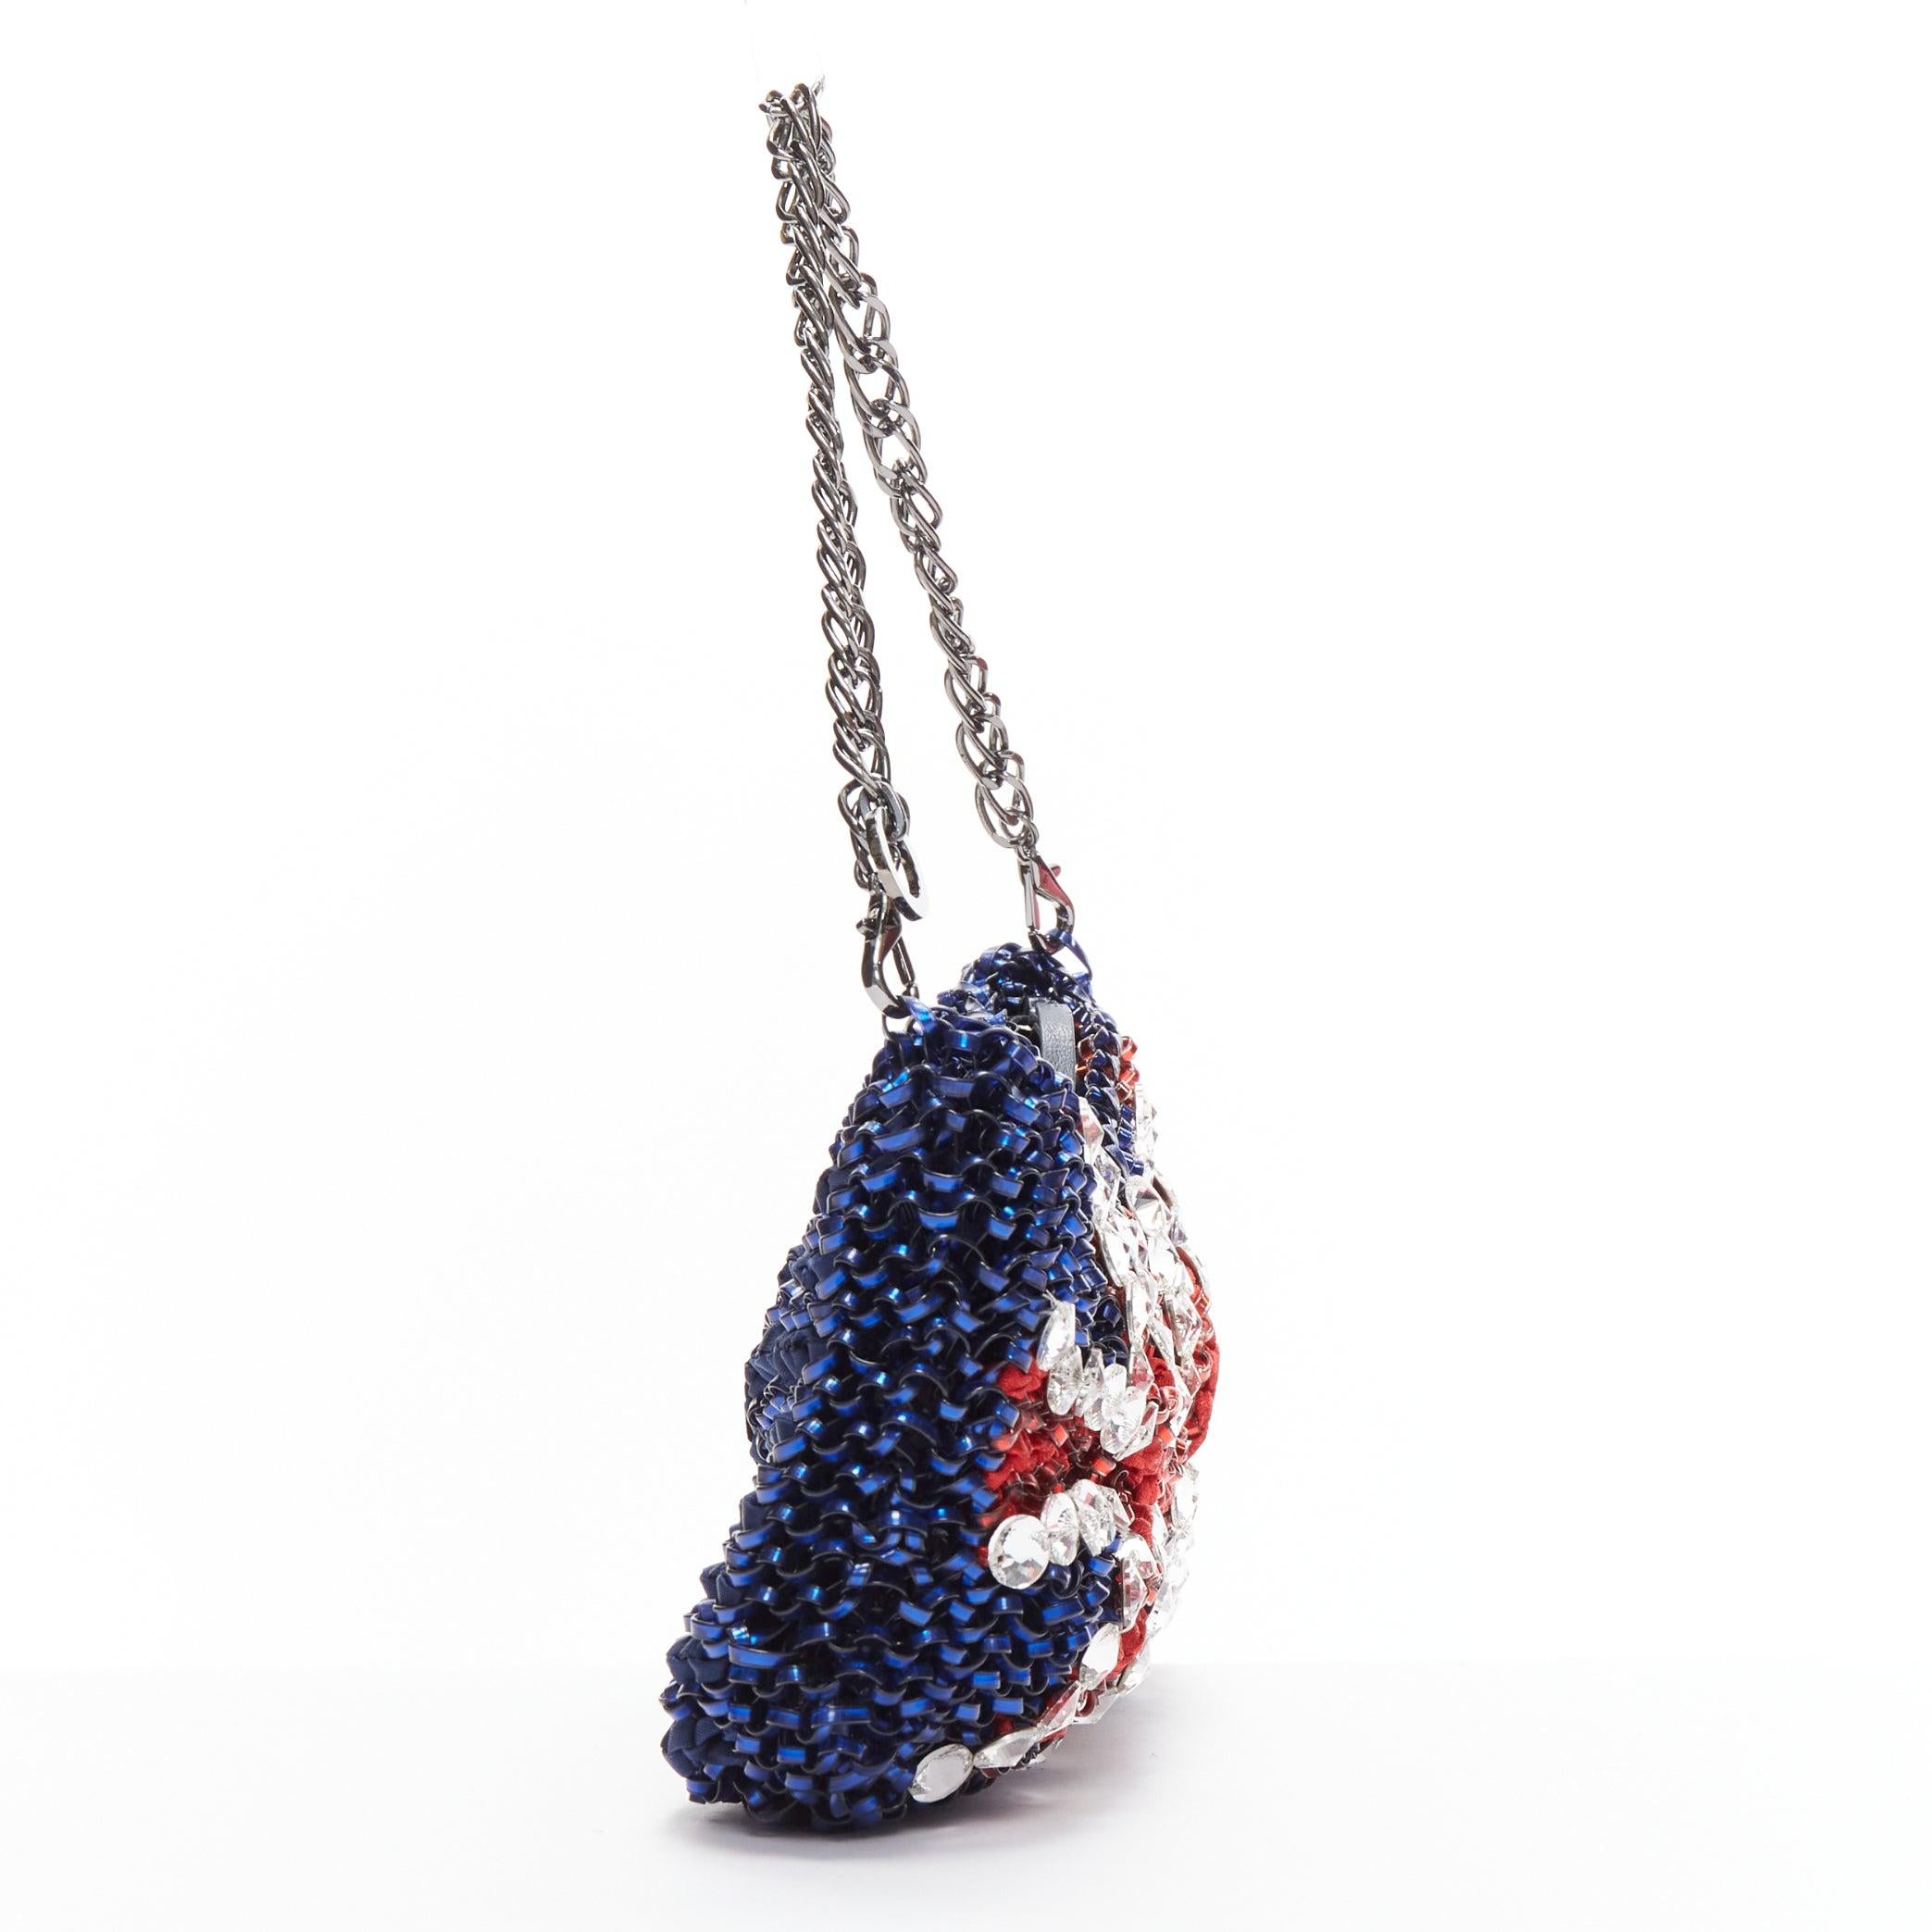 Women's ANTEPRIMA Wire Bag British Union Jack crystal embellished bow clutch